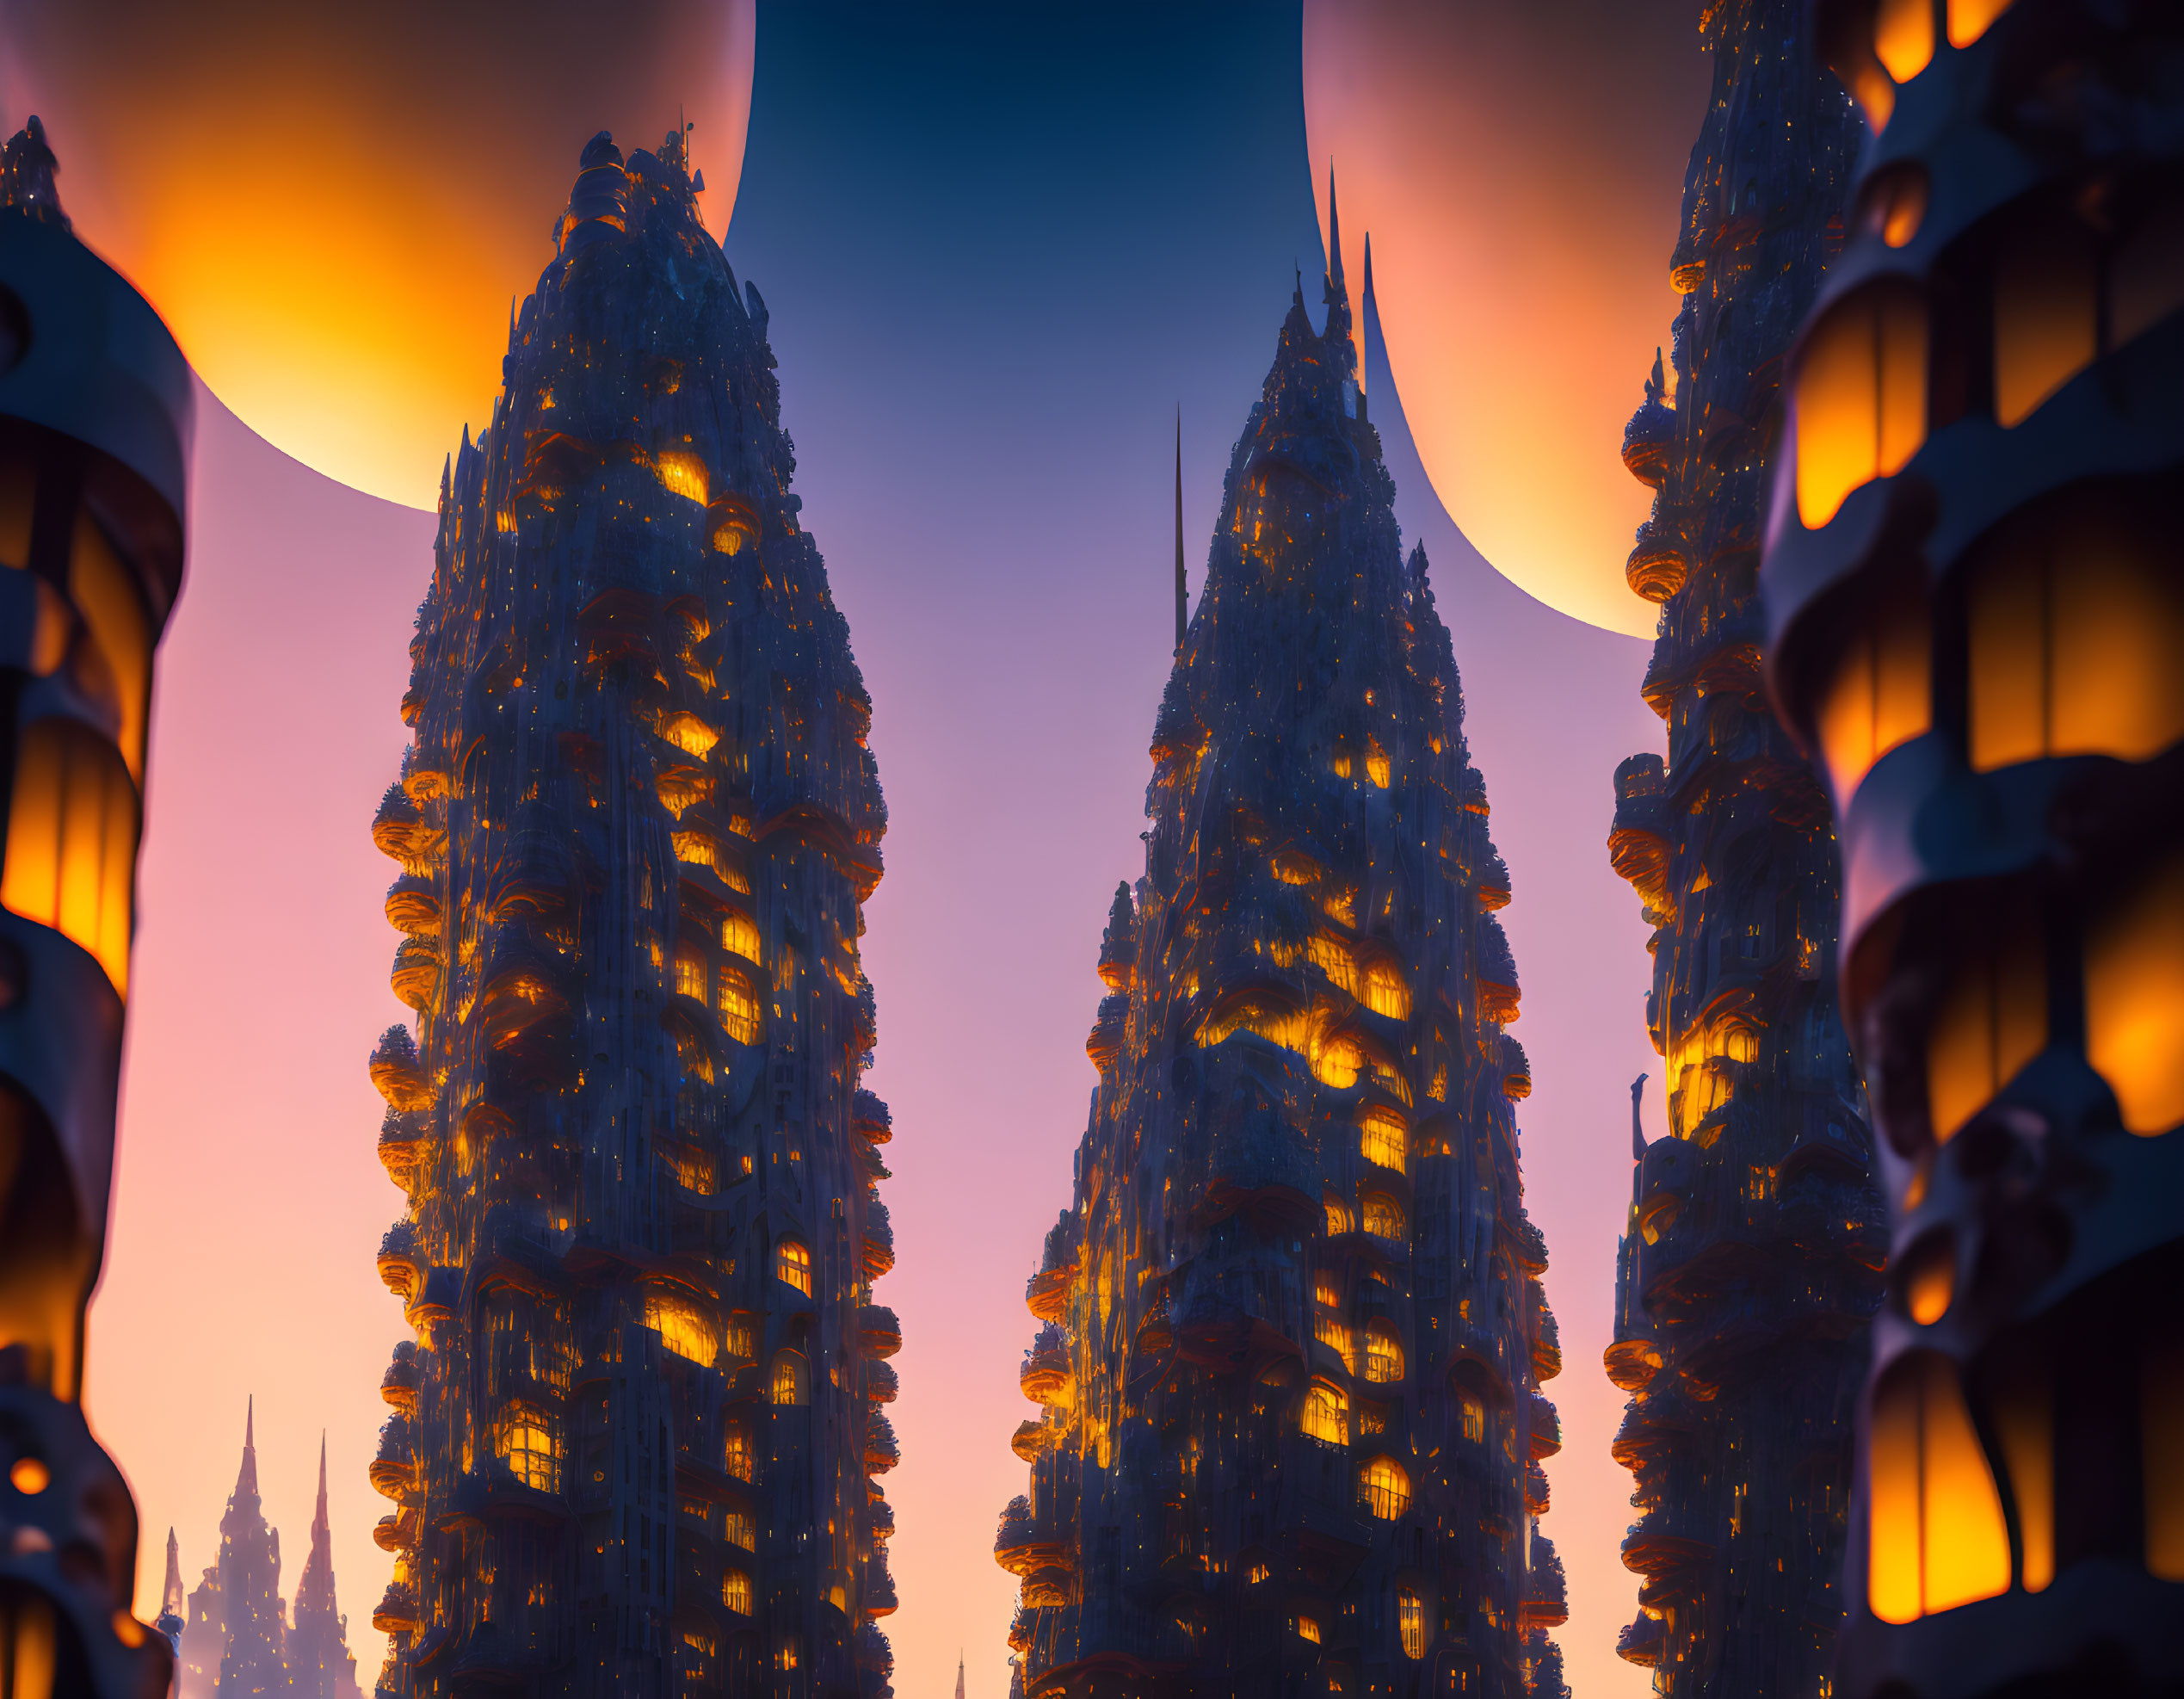 Futuristic cityscape with illuminated skyscrapers under twilight sky